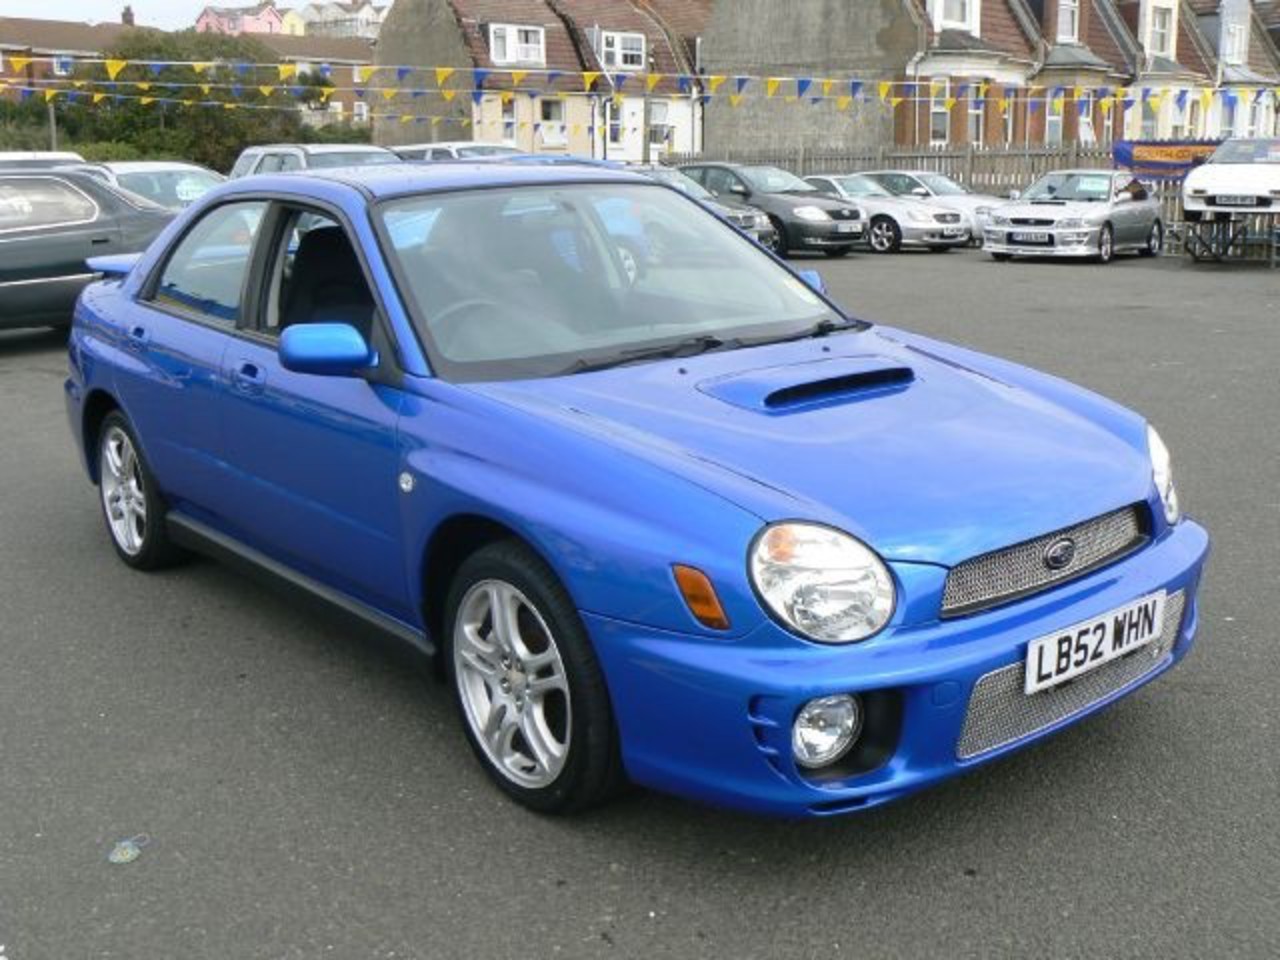 Subaru Impreza Wrx Turbo Awd, 1994cc, Saloon, Turbo, 5-Speed, Blue,